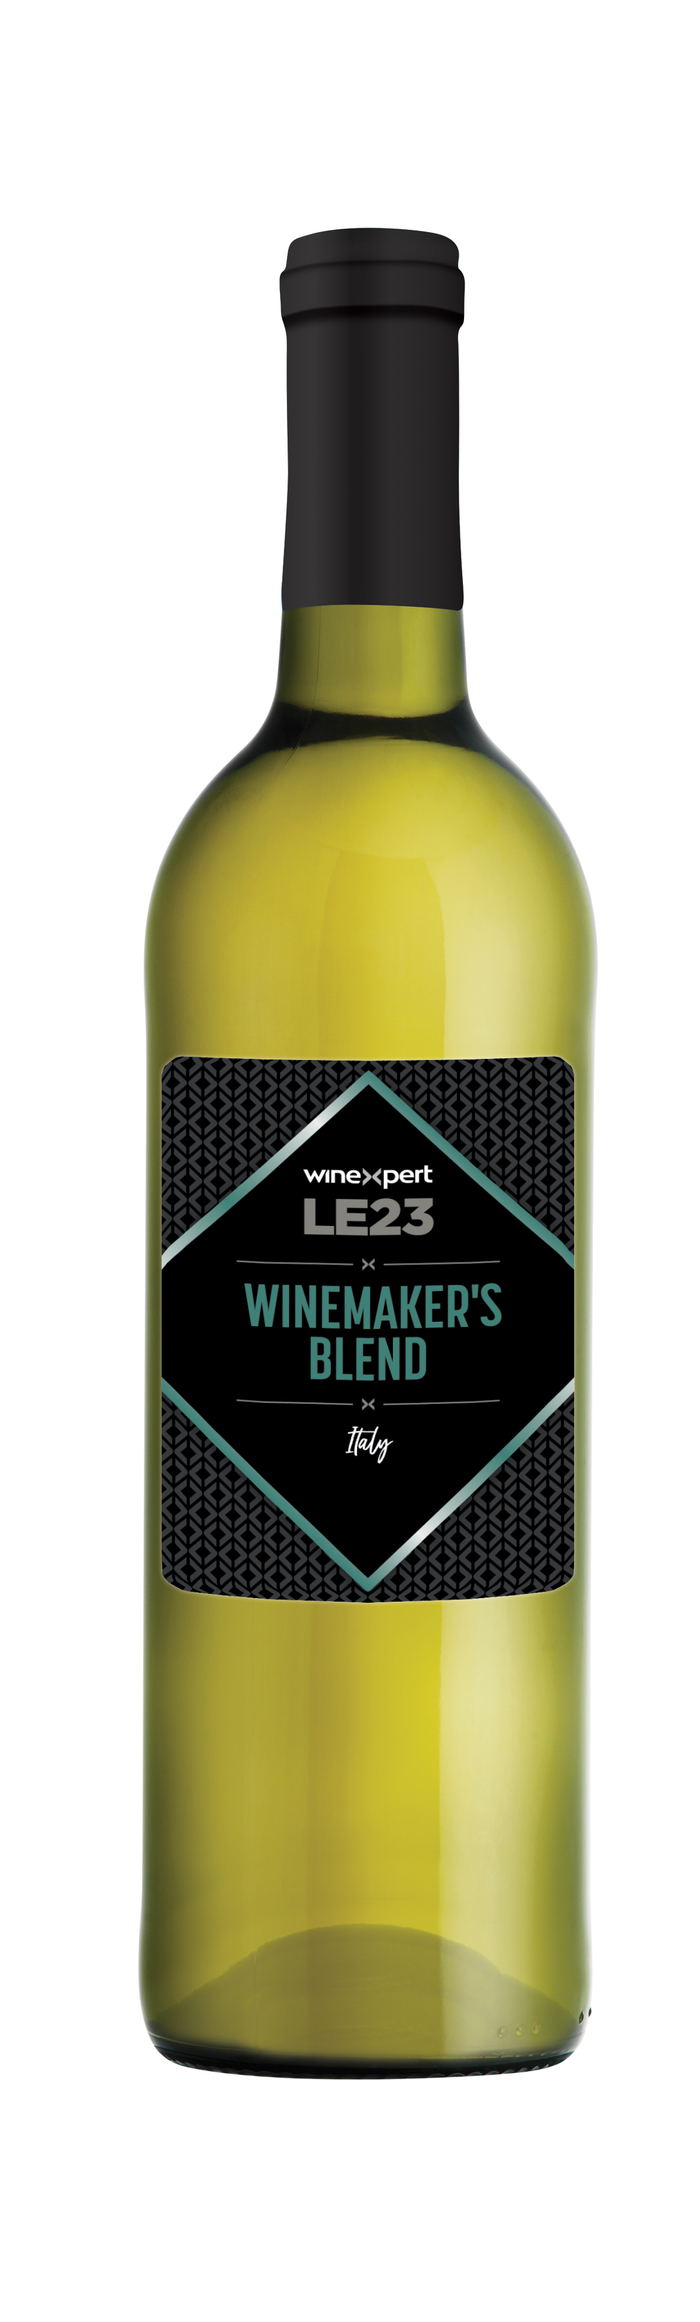 LE23 White Winemakers Blend_HI.jpg